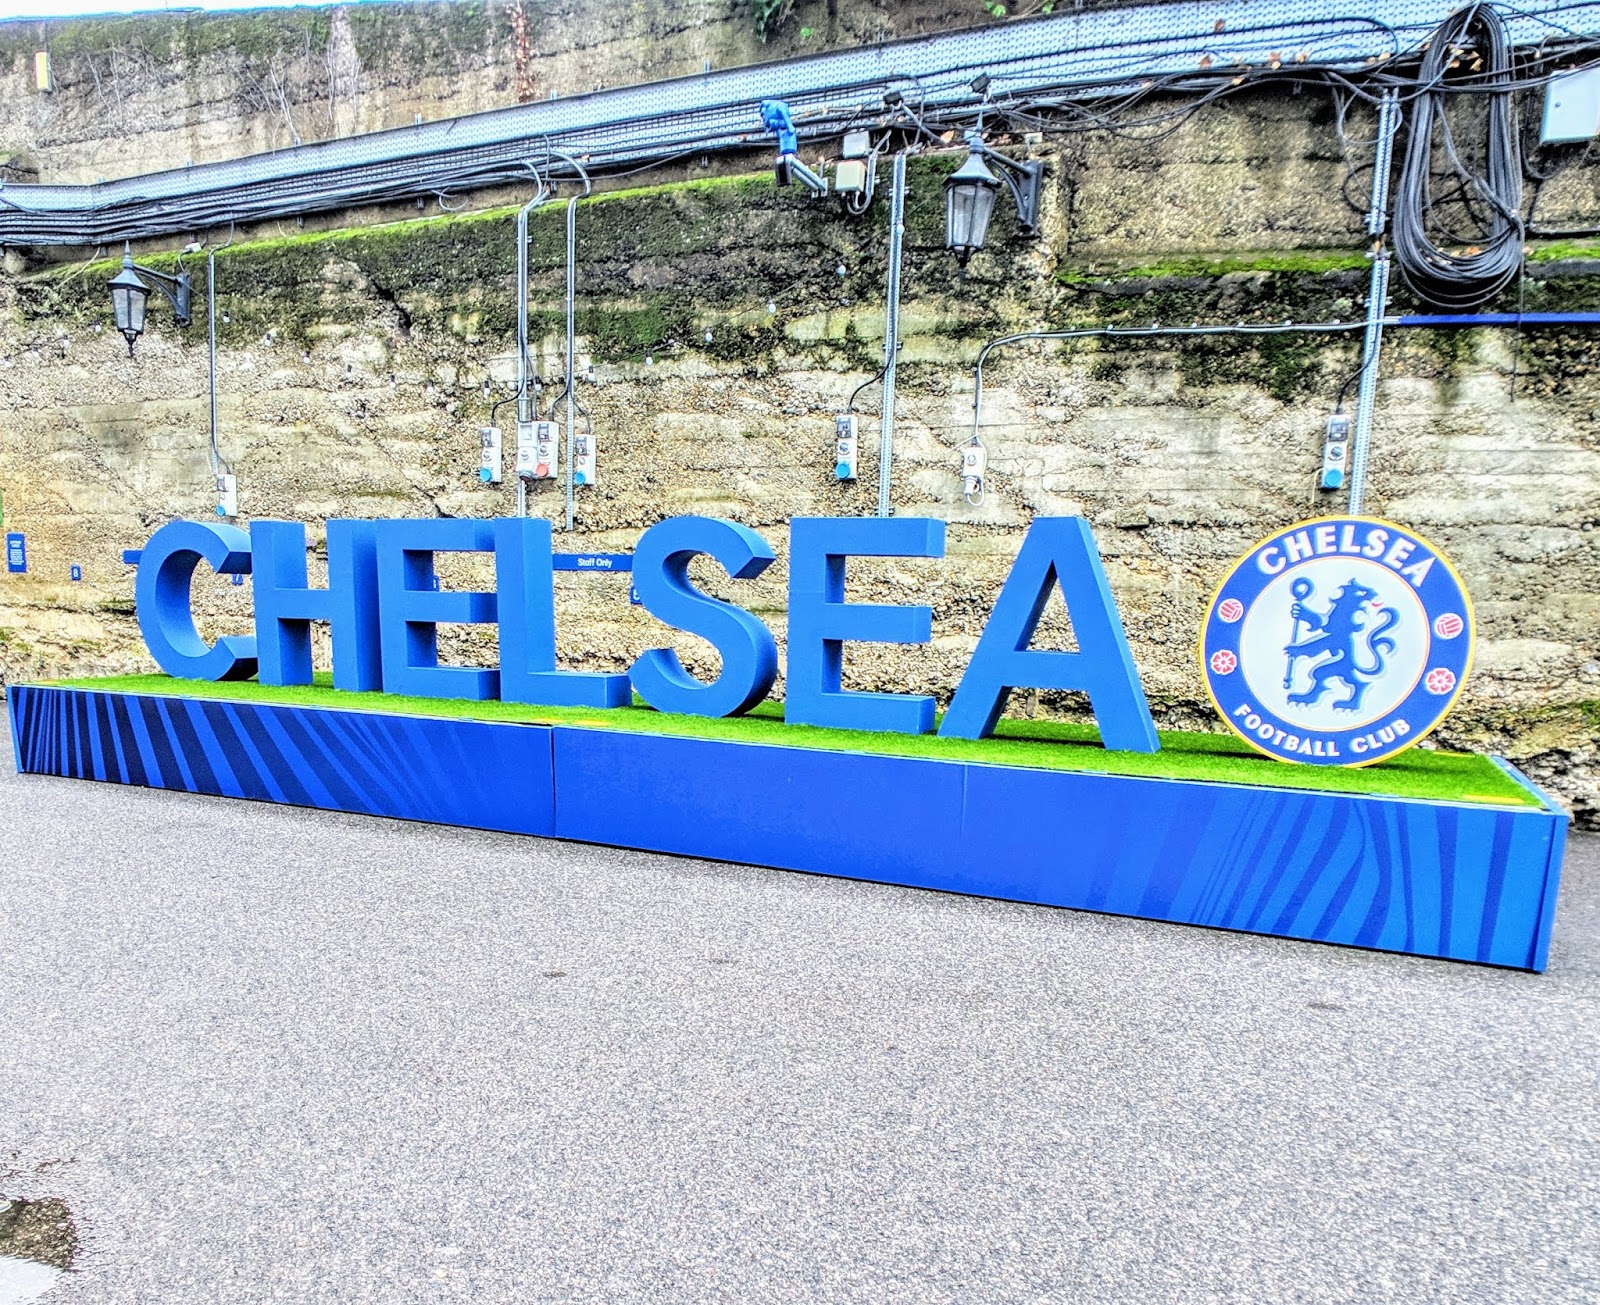 Premier League Tickets Chelsea Hospitality Packages [Part 2]